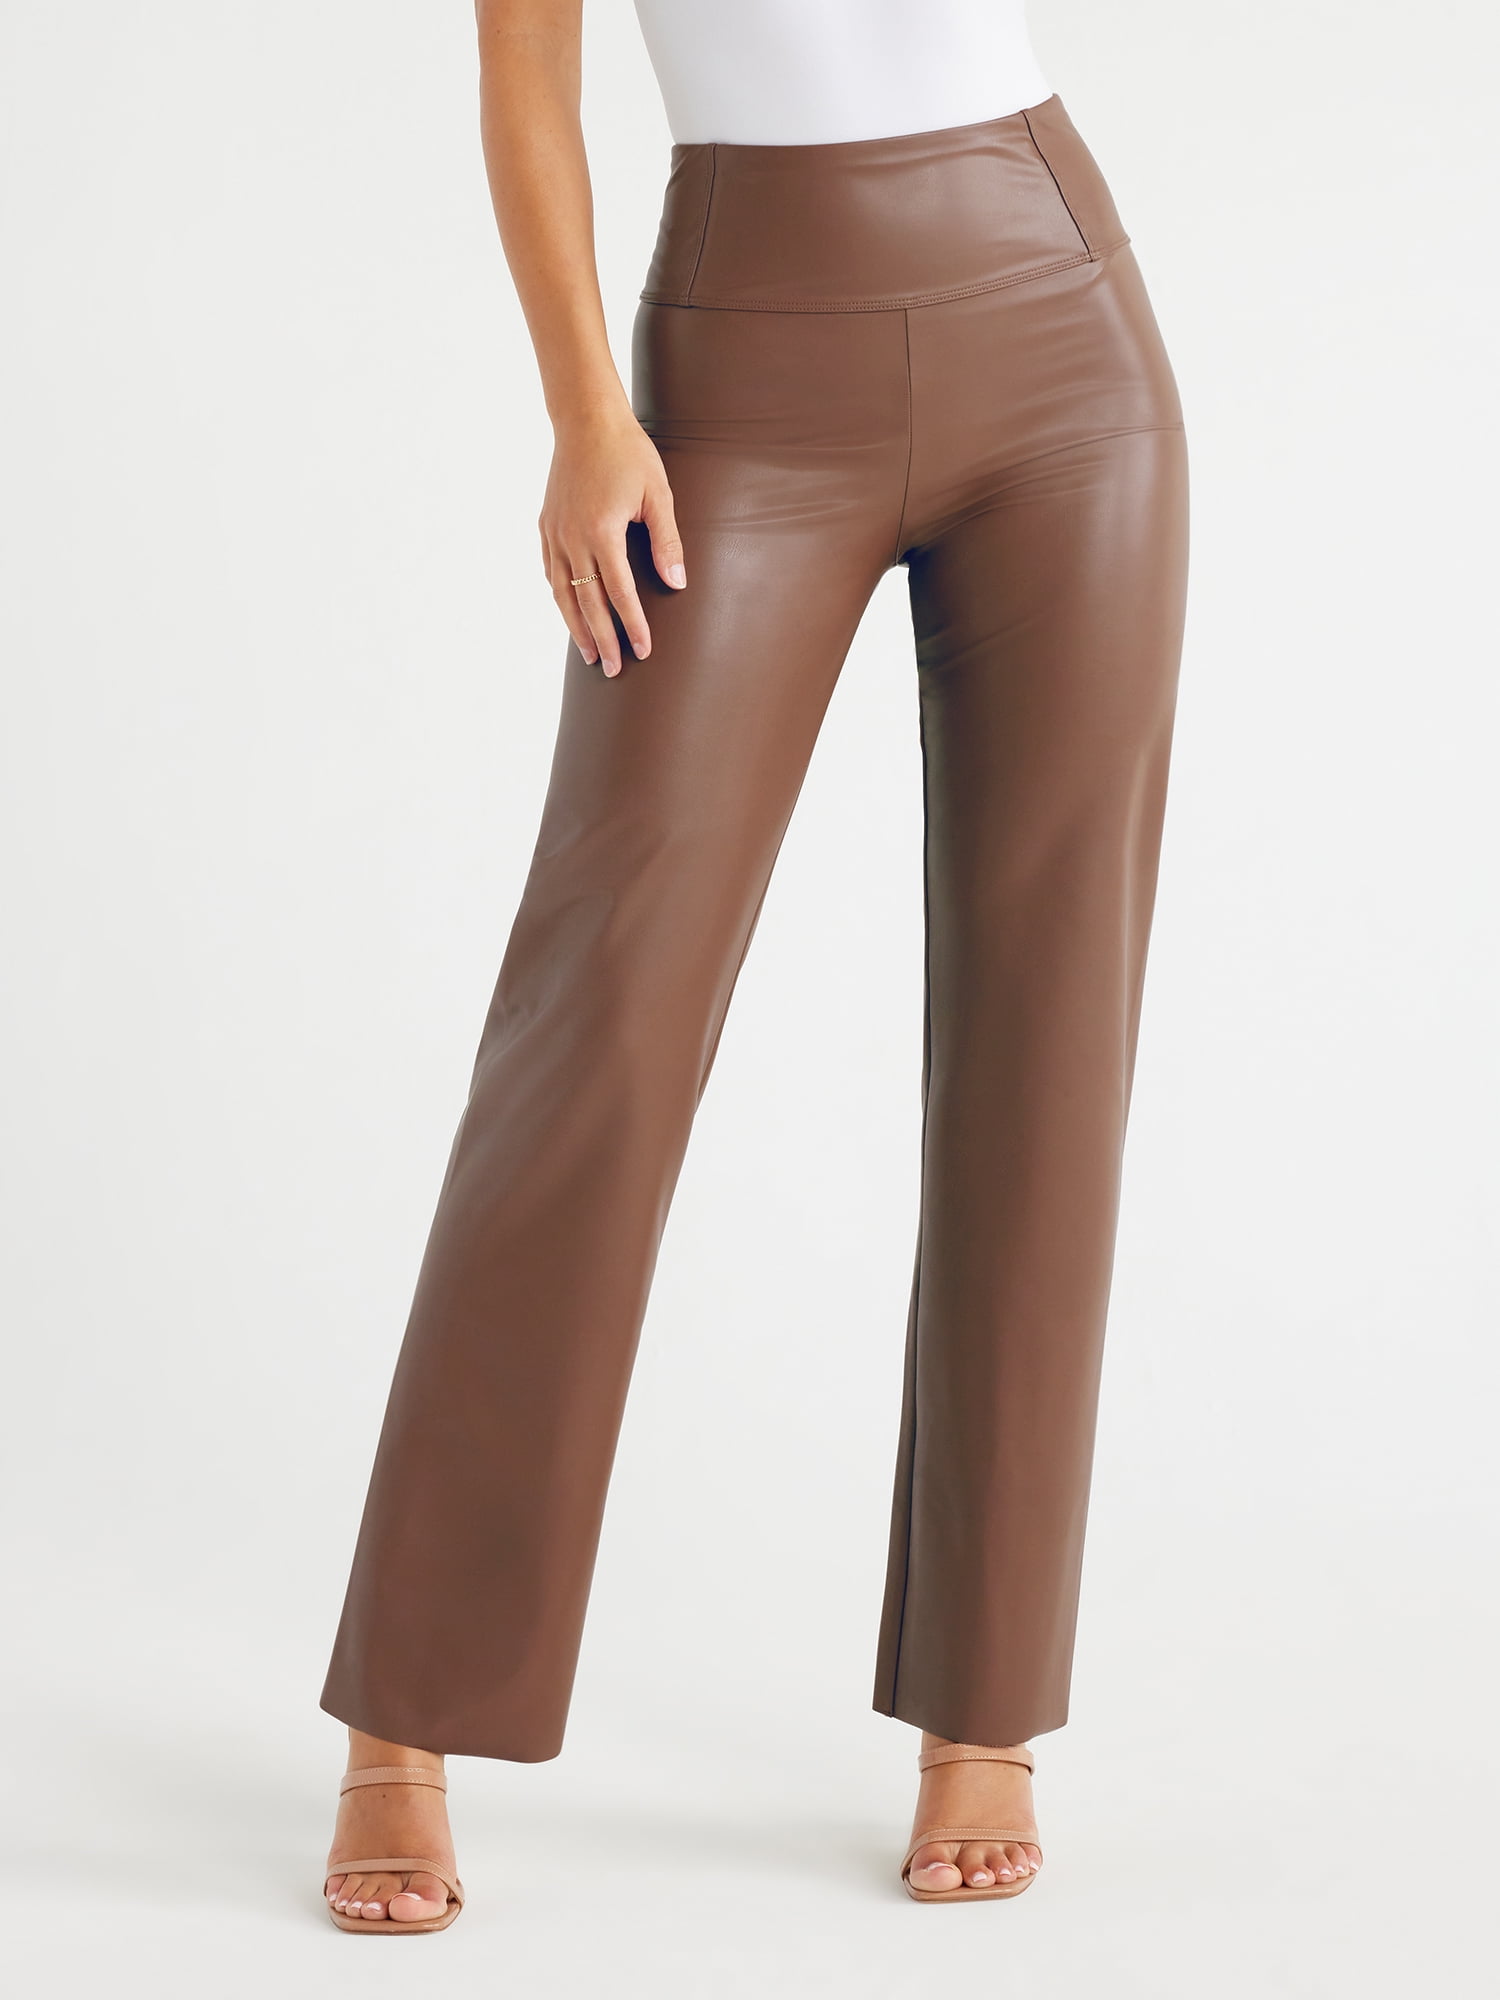 Sofia Jeans Women's Faux Leather Bootcut Pants, 32.5 Inseam